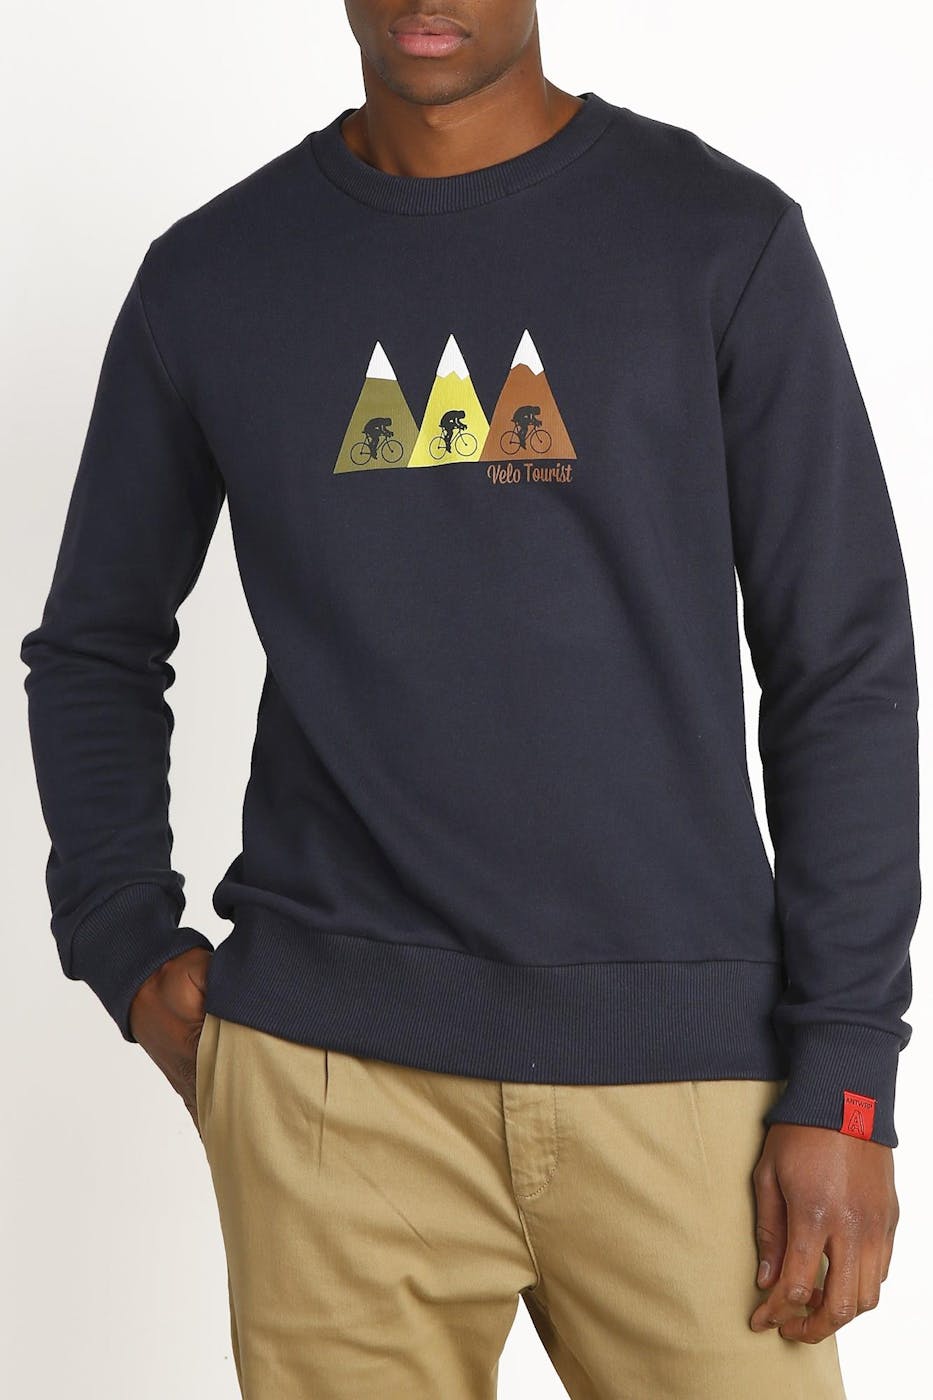 Antwrp - Donkerblauwe Bergrit sweater